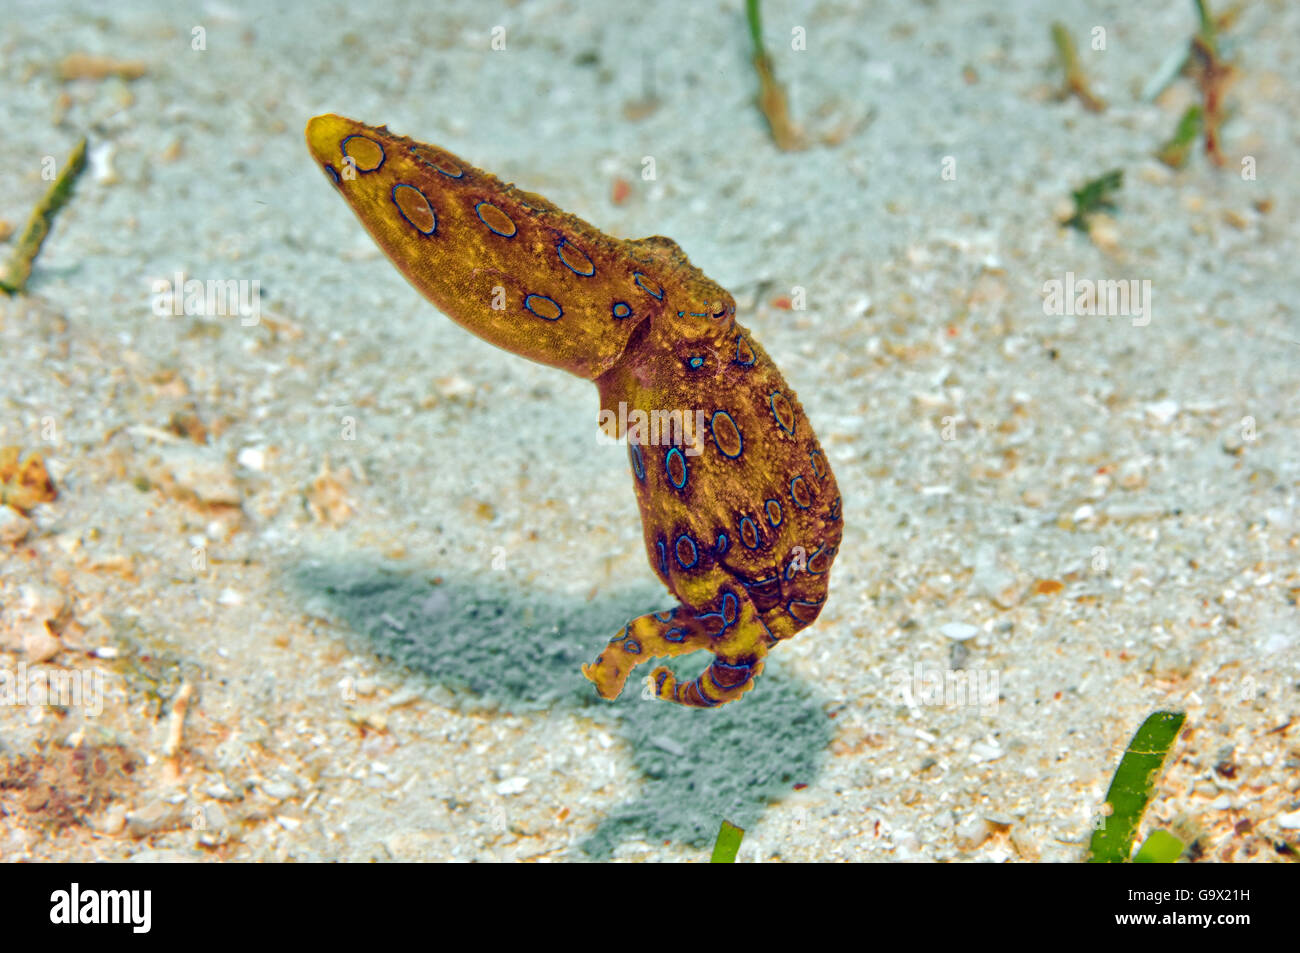 Plus grand héron bleu pieuvre, Cabilao, Visayas, Philippines, Asie / (Hapalochlaena lunulata) Banque D'Images